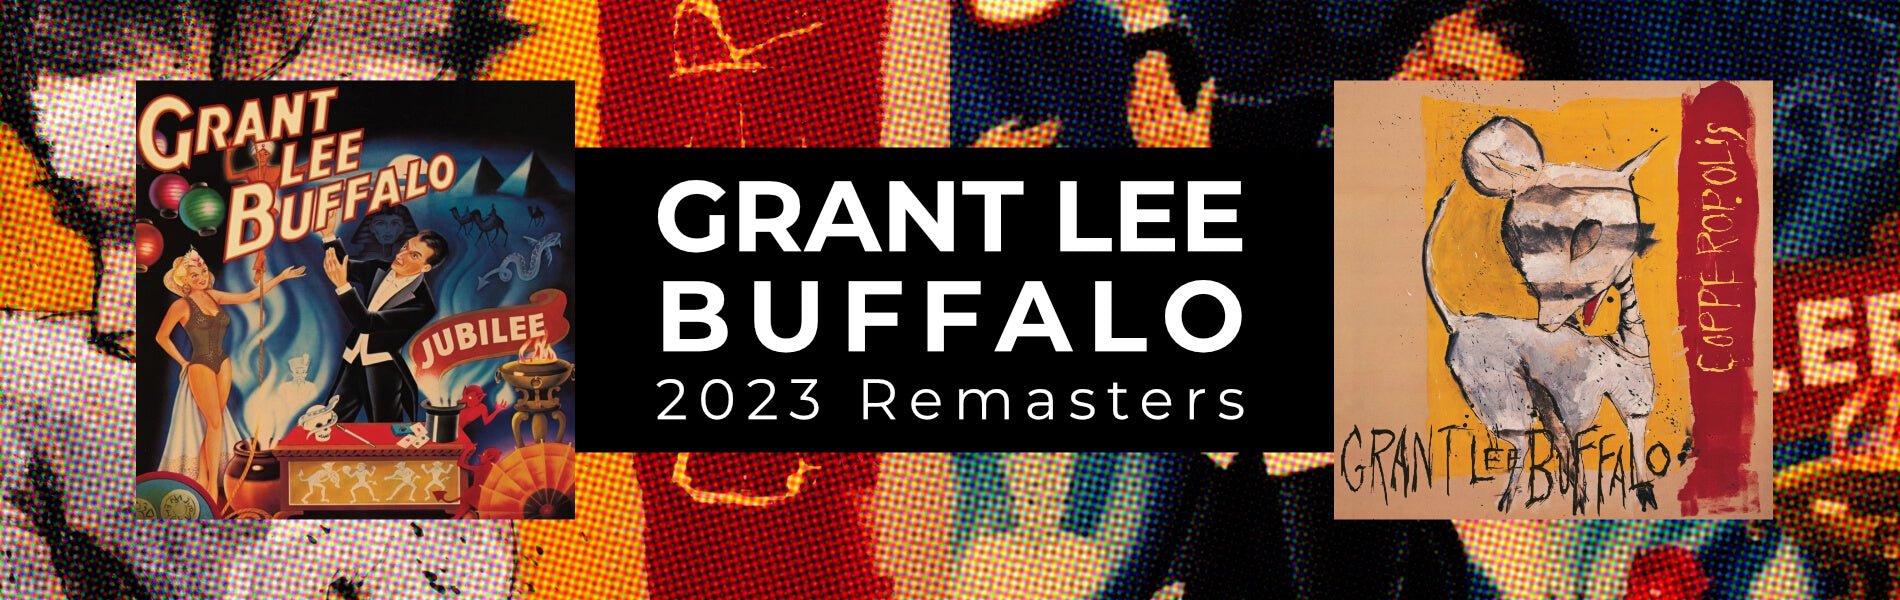 Grant Lee Buffalo - 2023 Remasters - Copperopolis, Jubilee